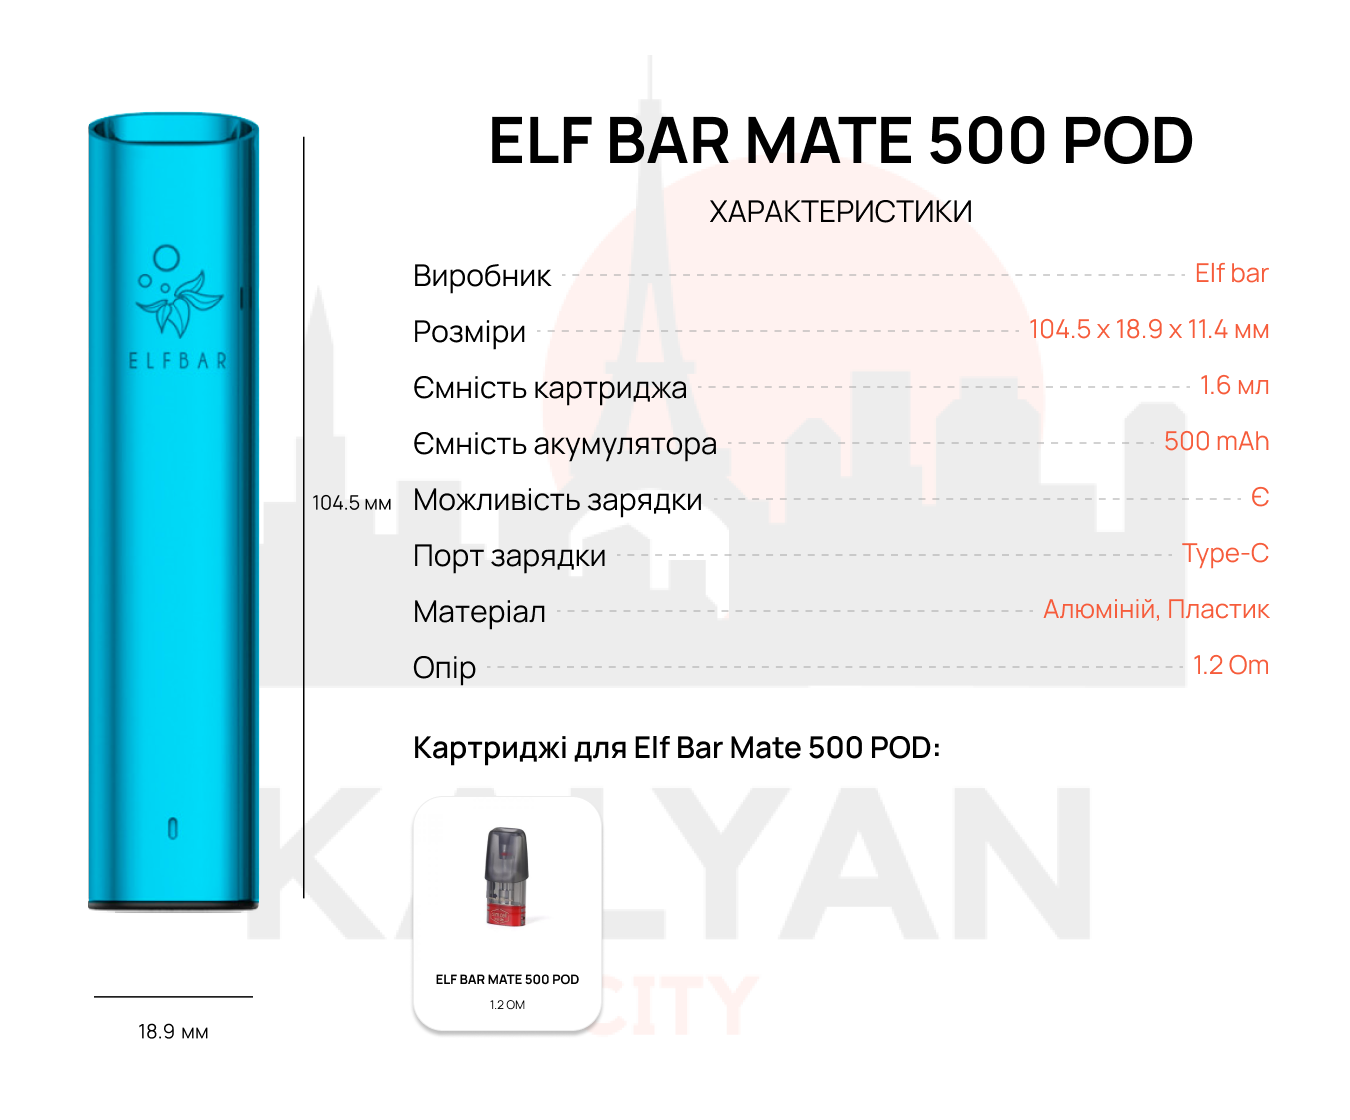 Elf Bar Mate 500 POD Характеристики